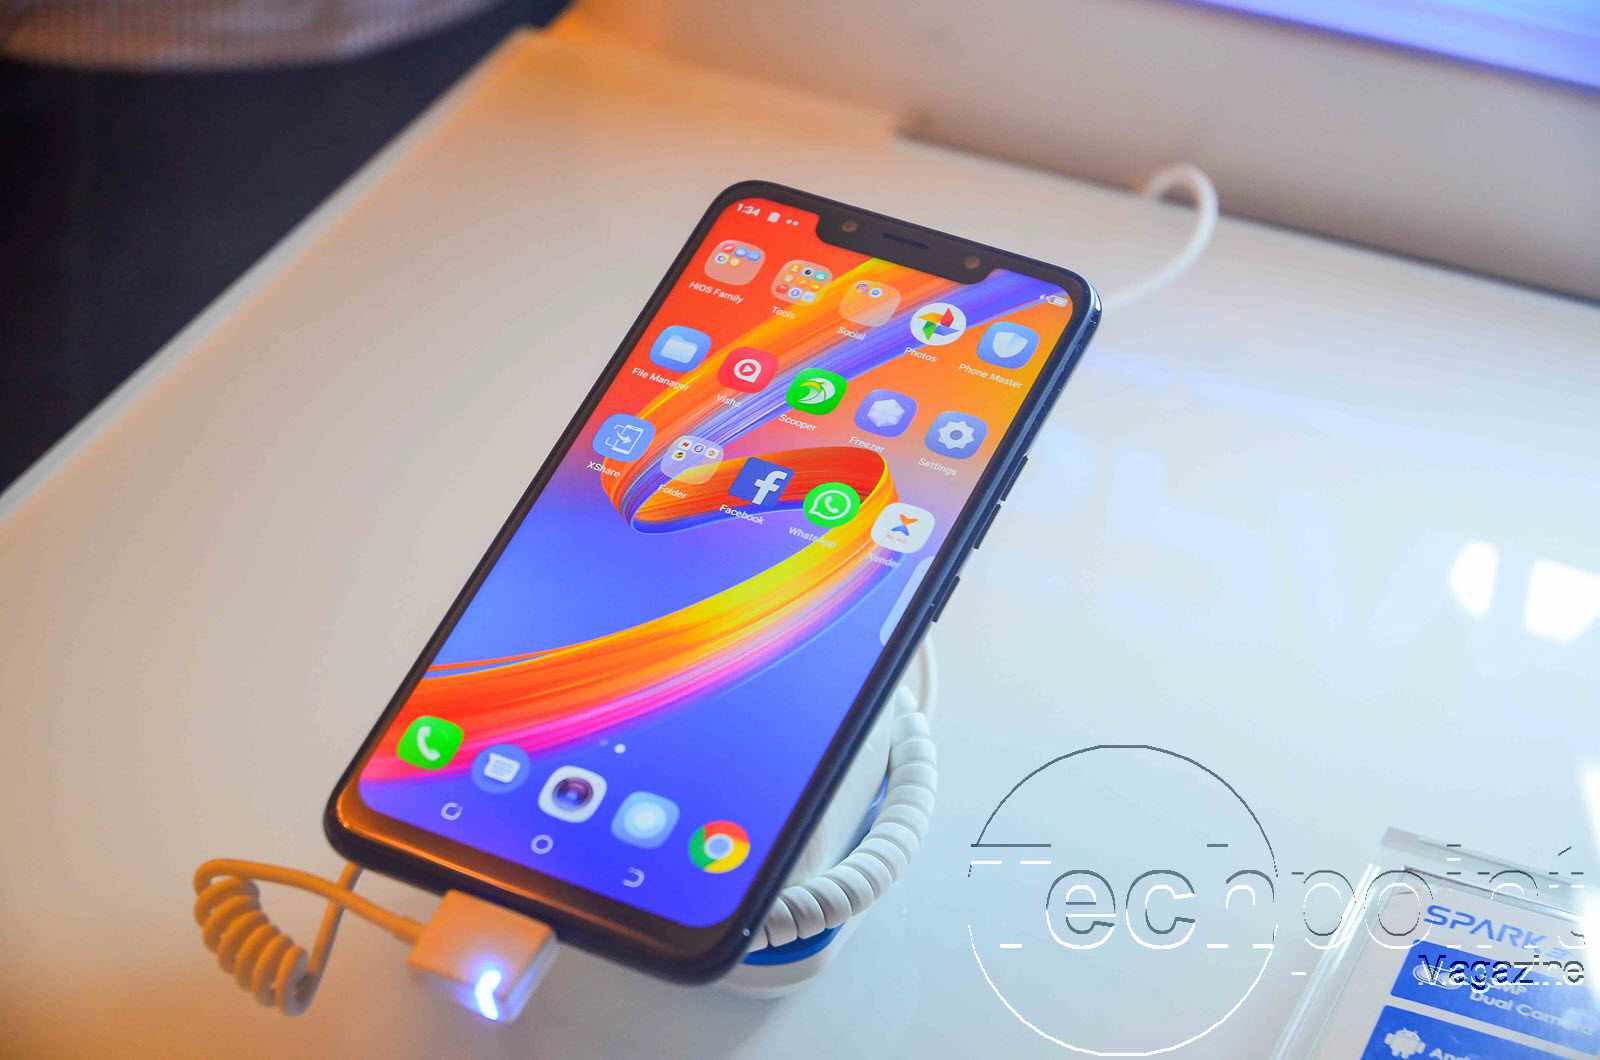 tecno spark 3 smartphone launched in uganda